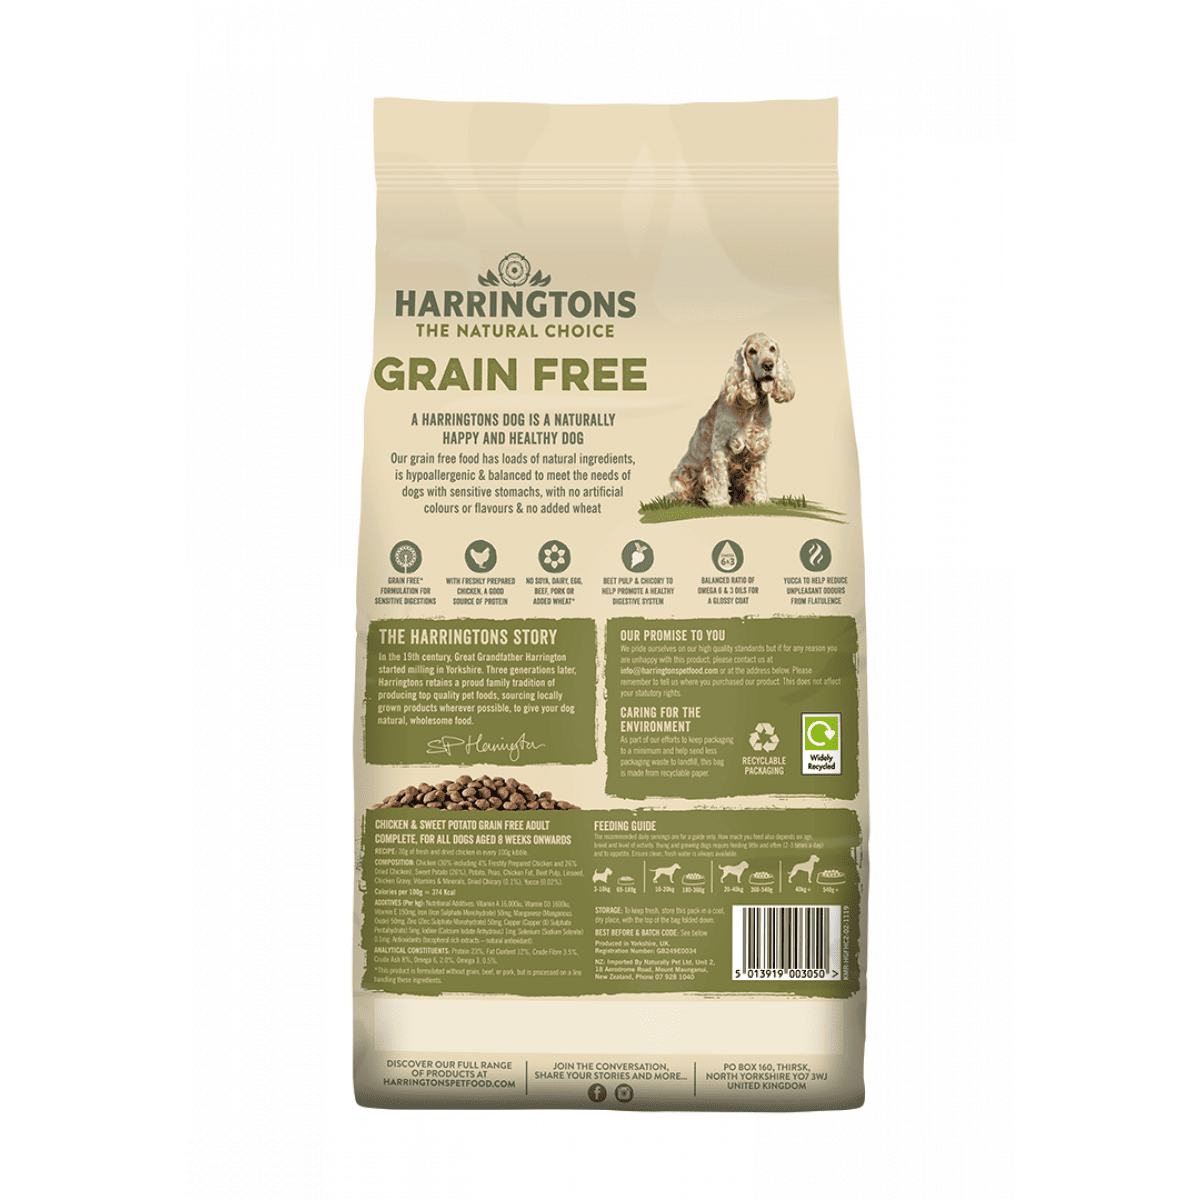 Harringtons Grain Free Adult Chicken & Sweet Potato 2kg – Pawfect Supplies Ltd Product Image